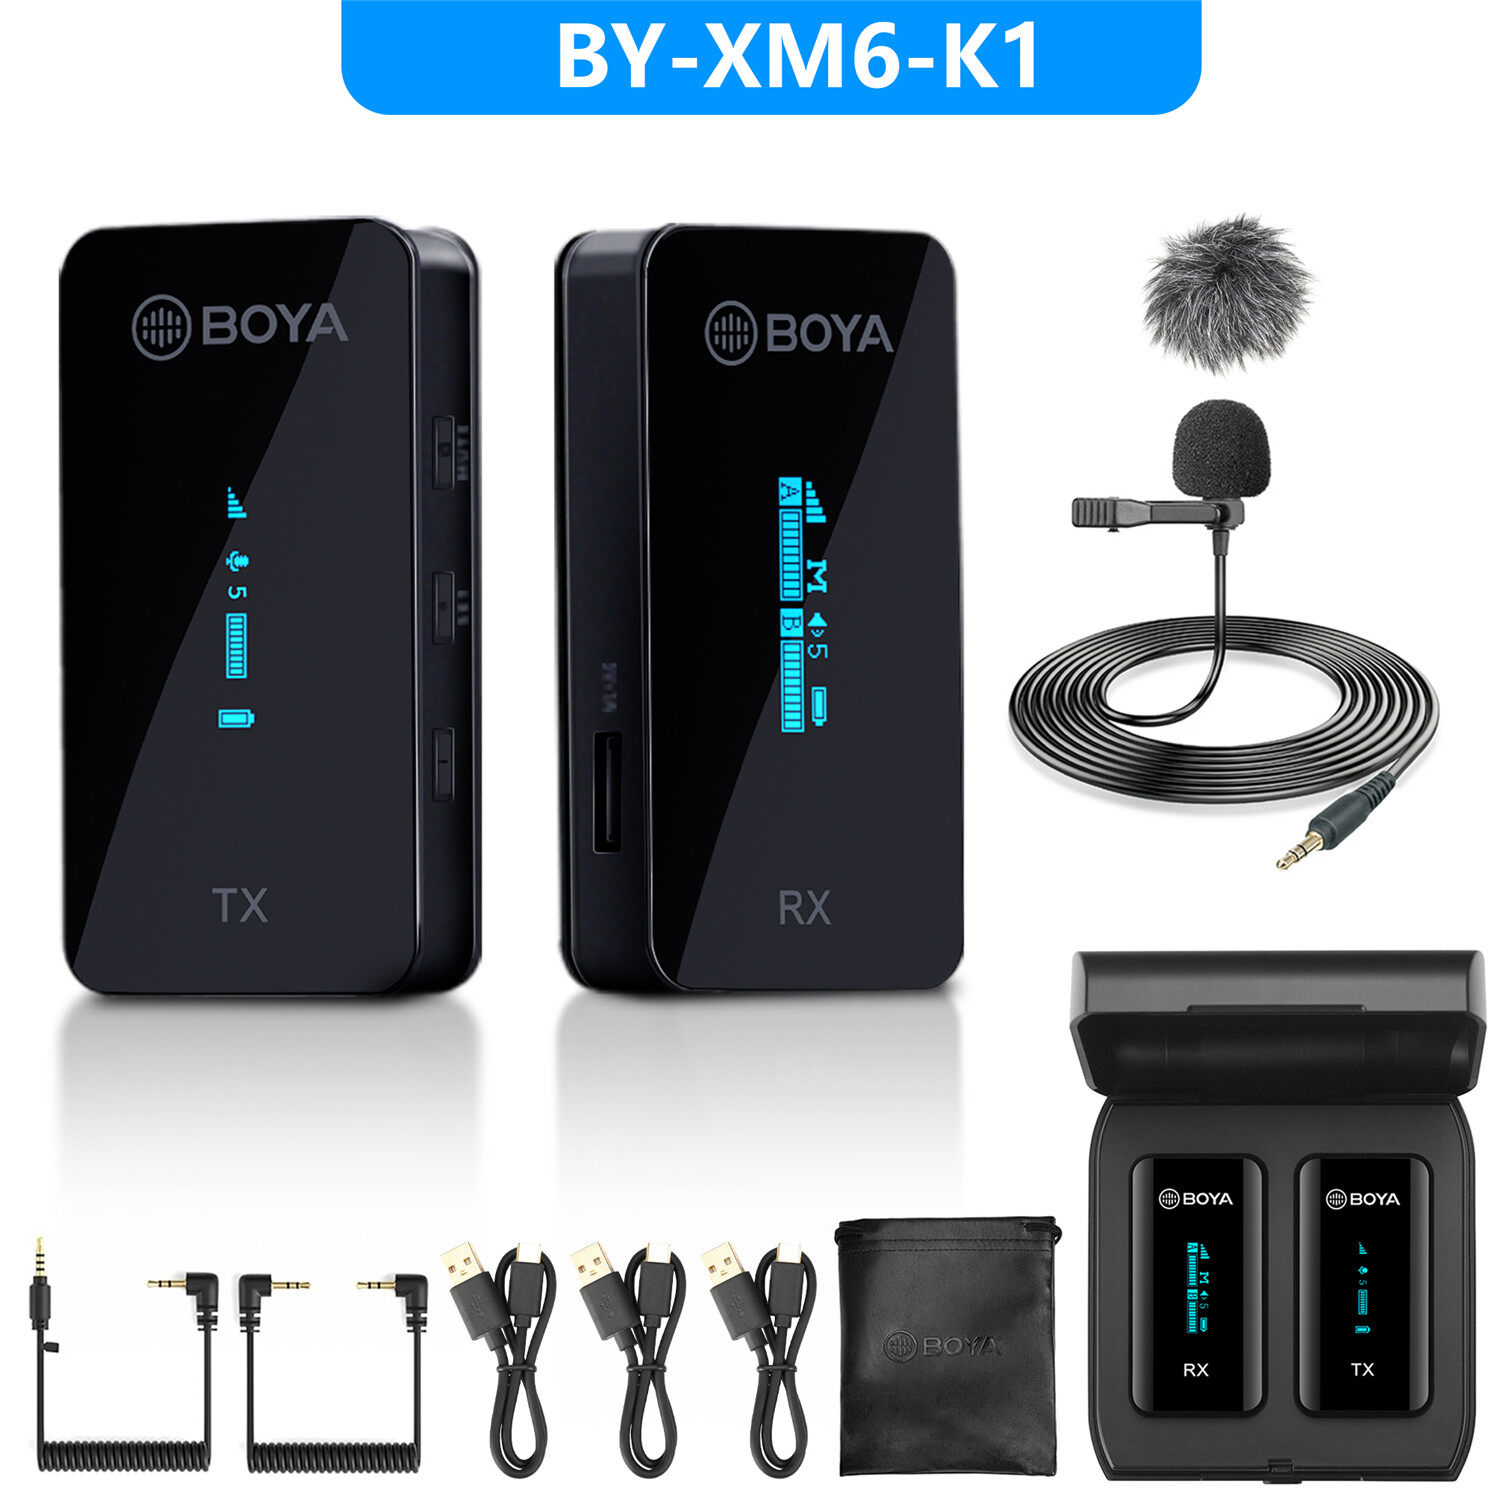 BOYA BY-XM6 K1/K2 2.4GHz Ultra-compact Wireless Microphone System